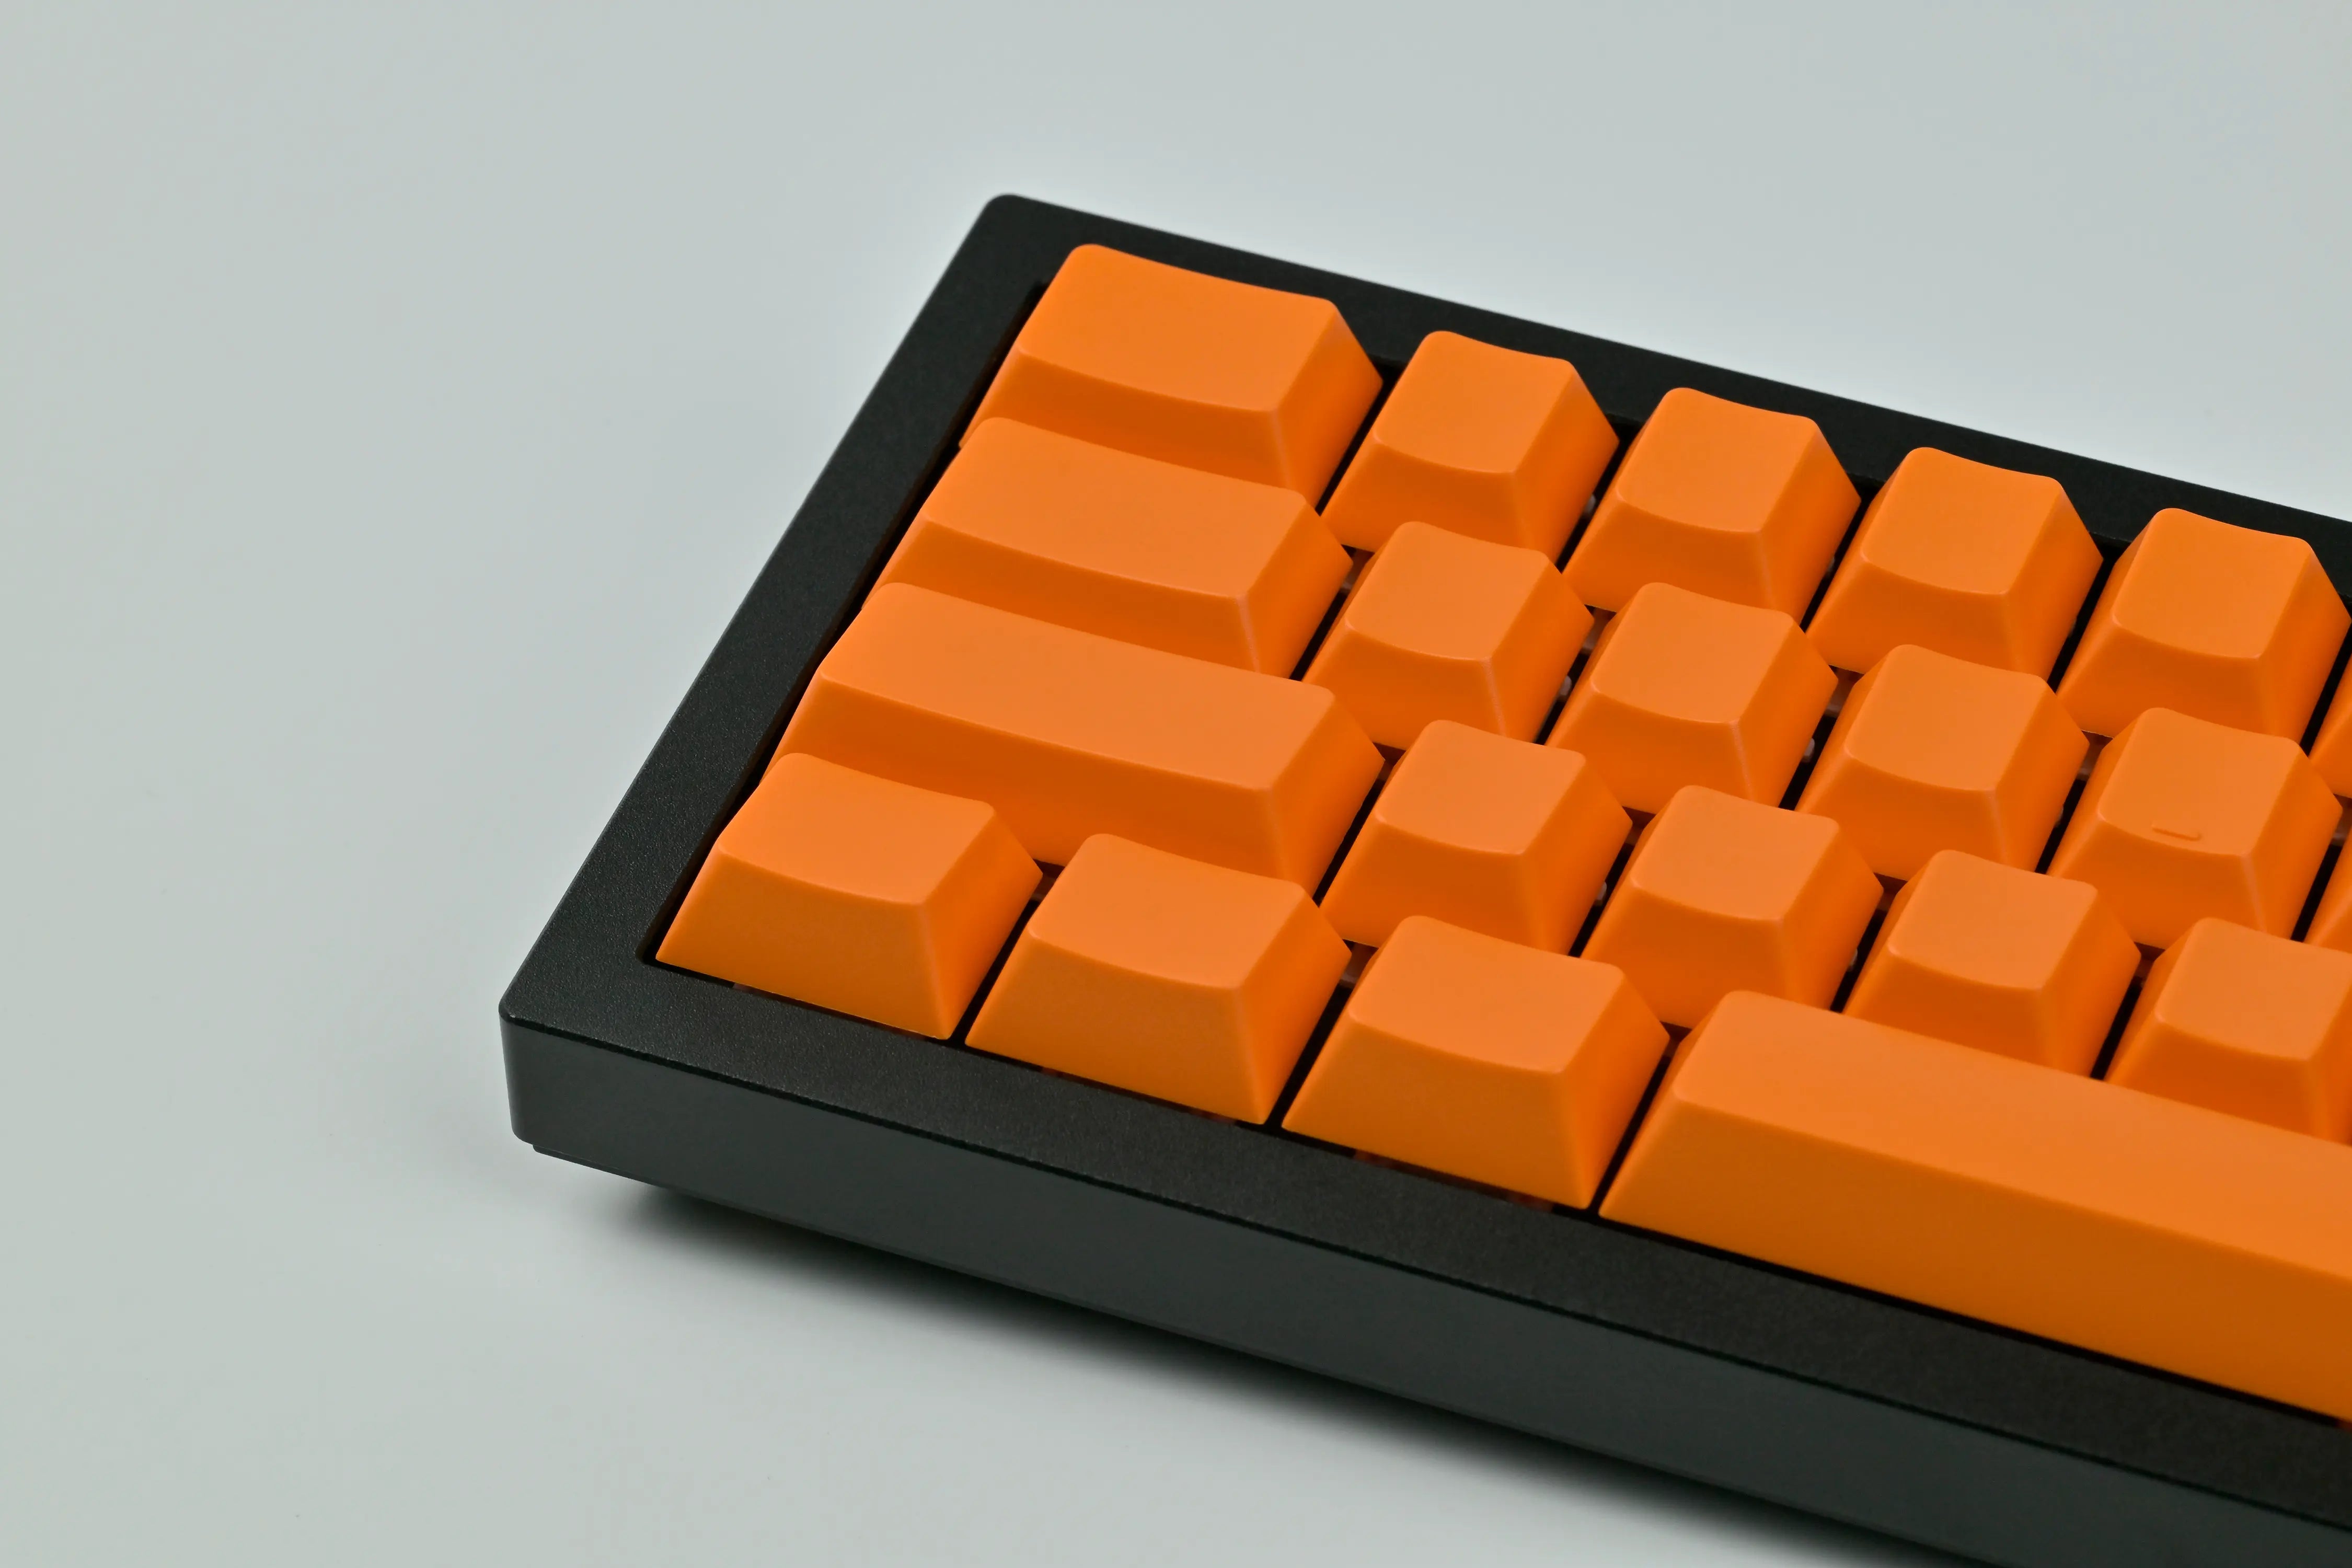 Keyreative ABS Cherry Profile Orange Blank Keycaps